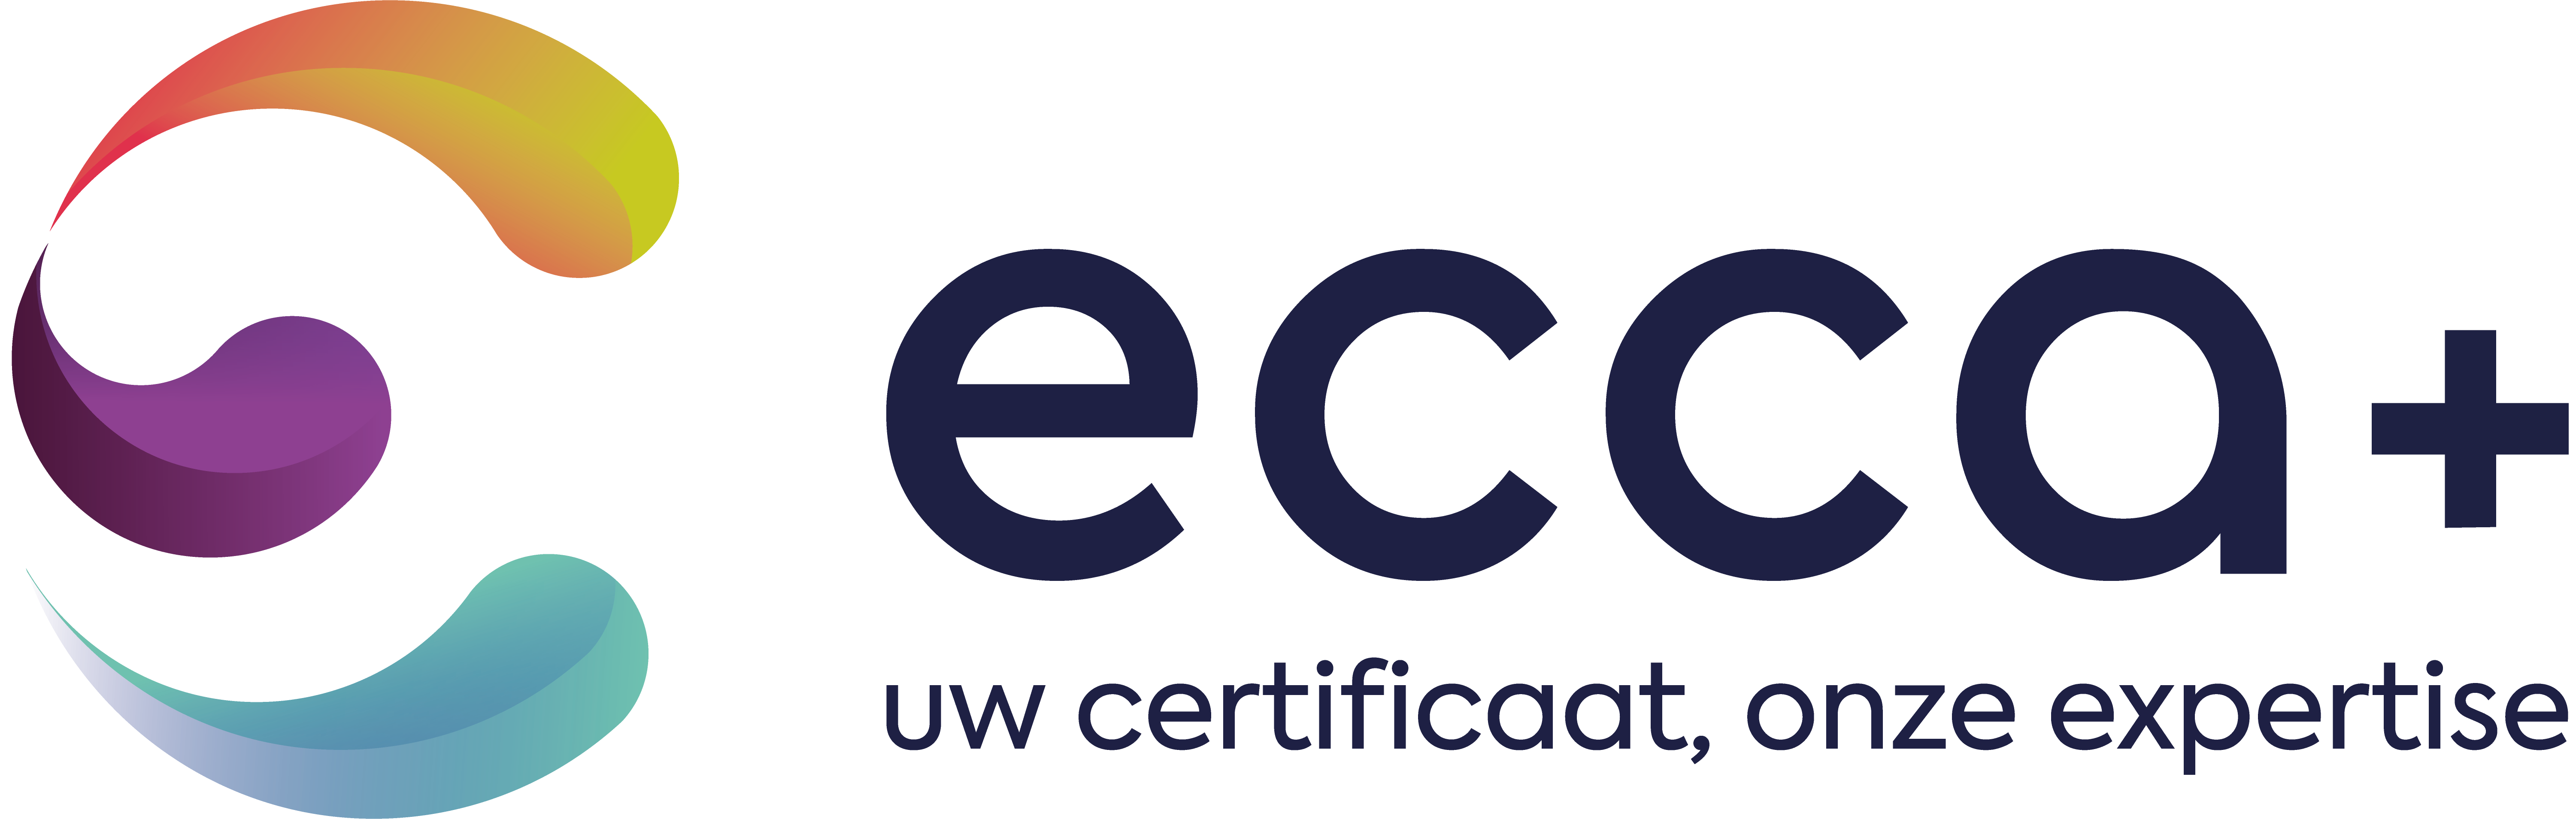 ECCA+-logo-POS.png